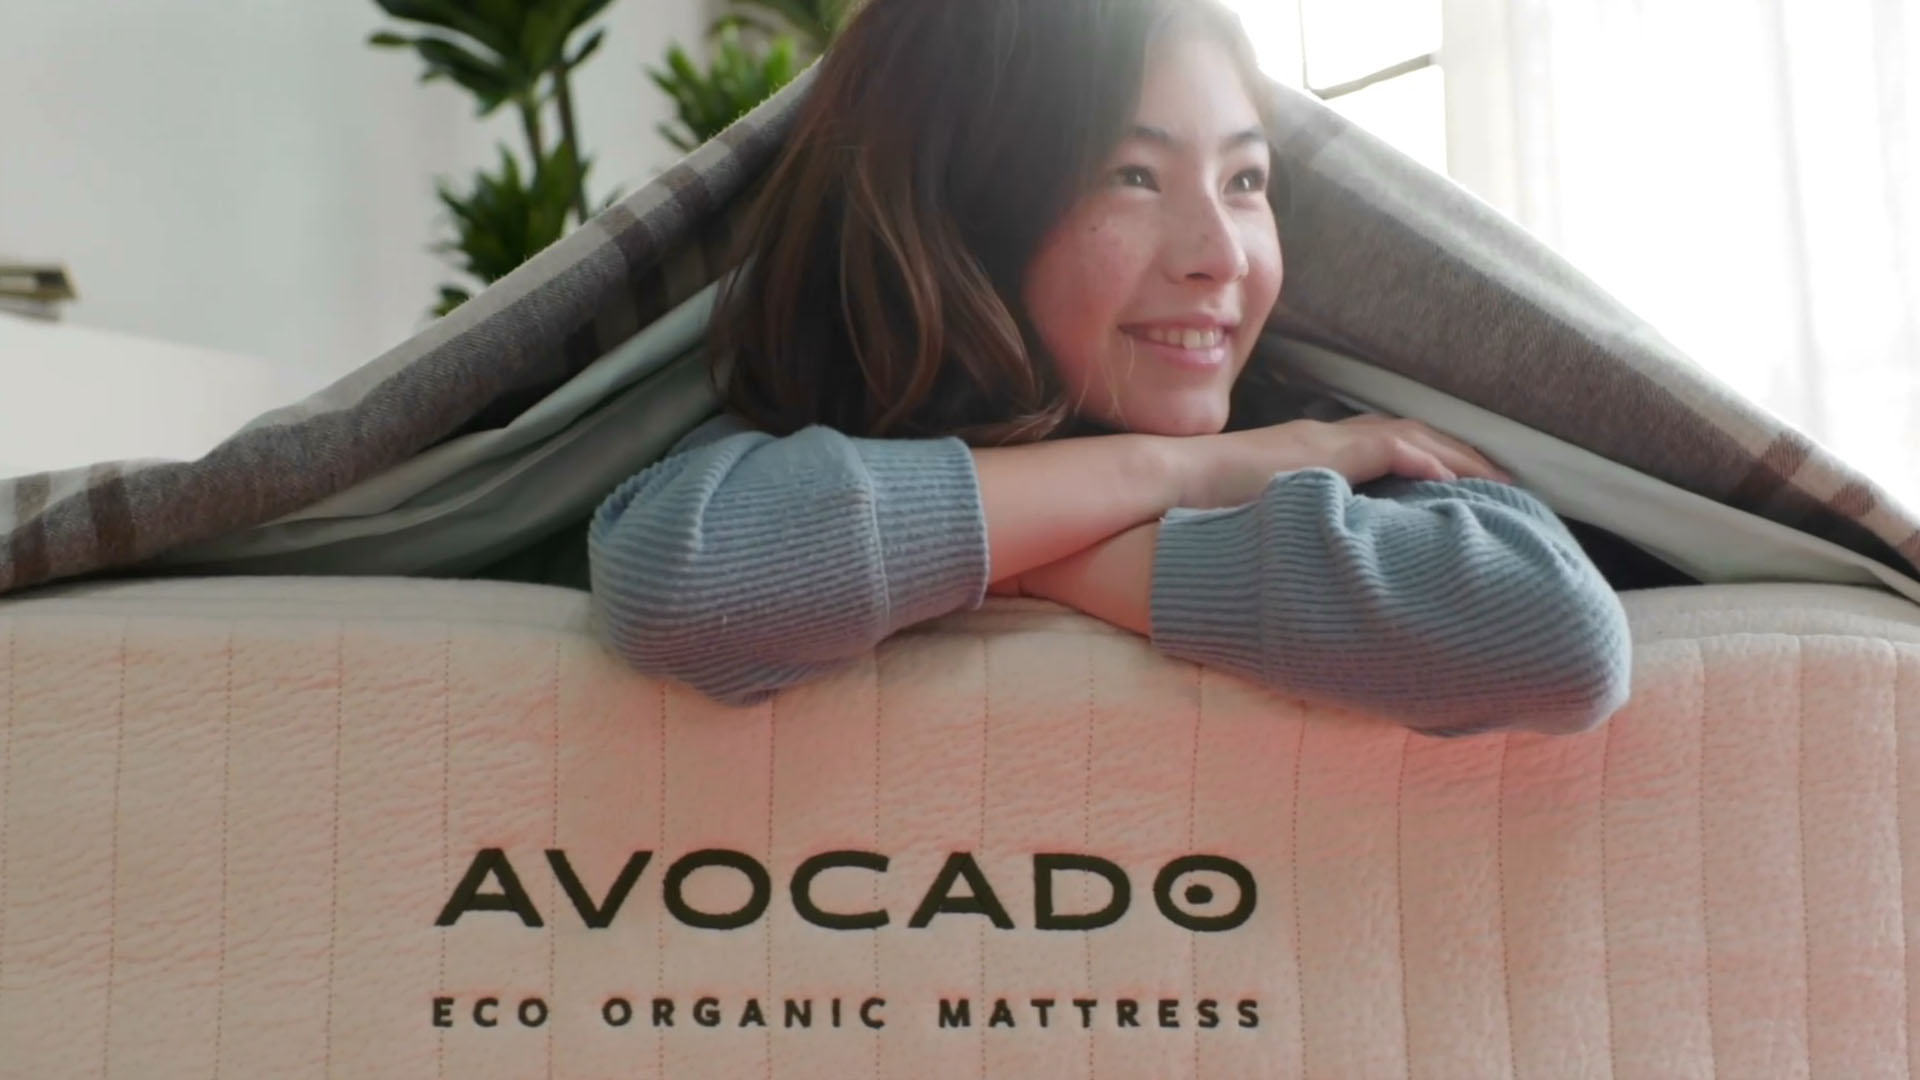 Who sells Avocado mattress near me in Prescott